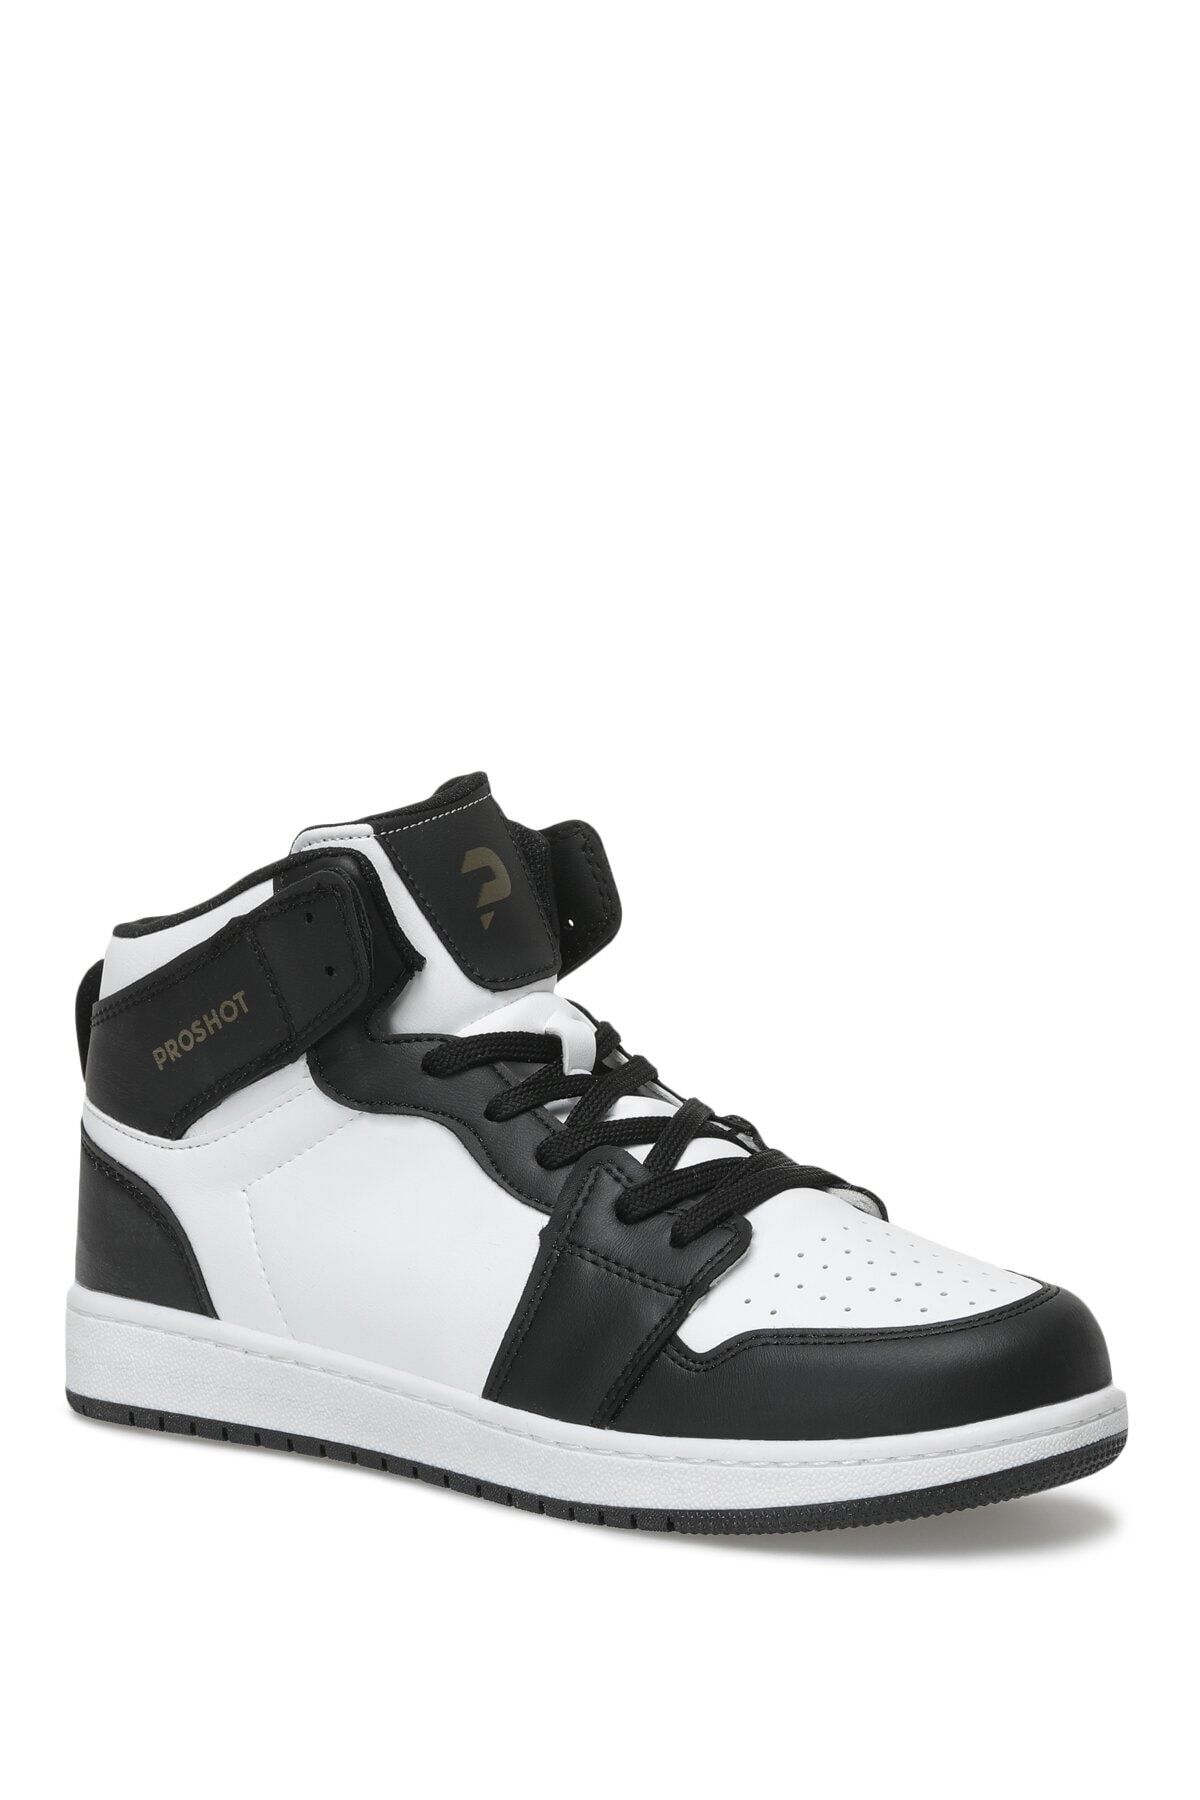 Proshot Floyd Hı 3fx Beyaz Erkek High Sneaker